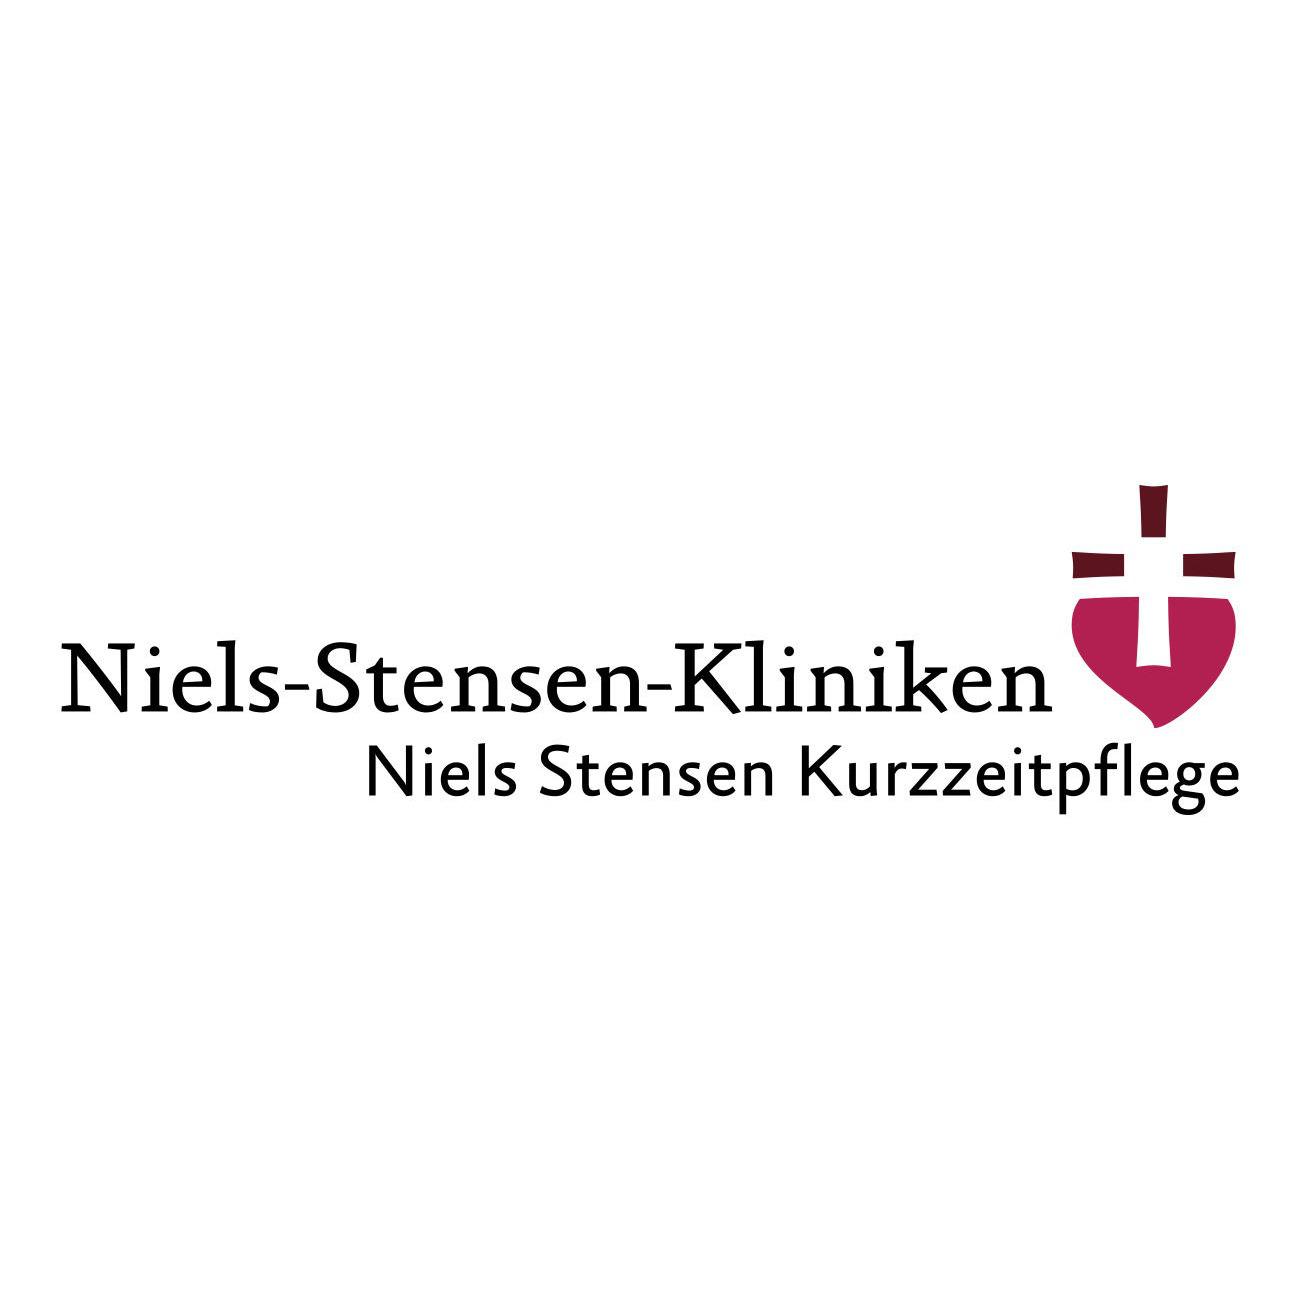 Niels Stensen Kurzzeitpflege Ankum in Ankum - Logo